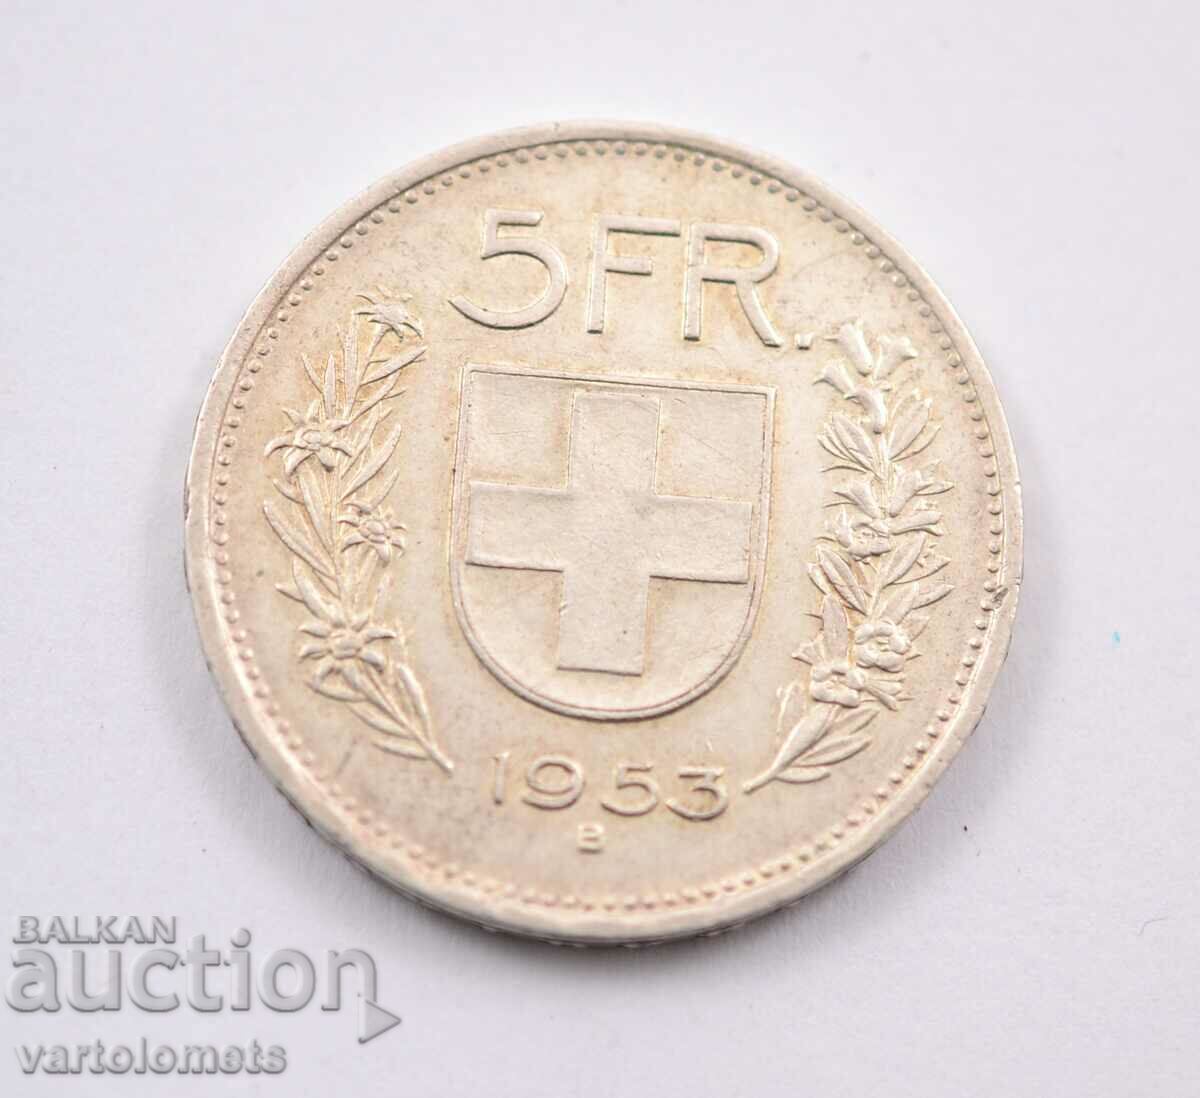 5 francs 1953 - Switzerland, Silver 0.835, 15g, ø 31.45mm